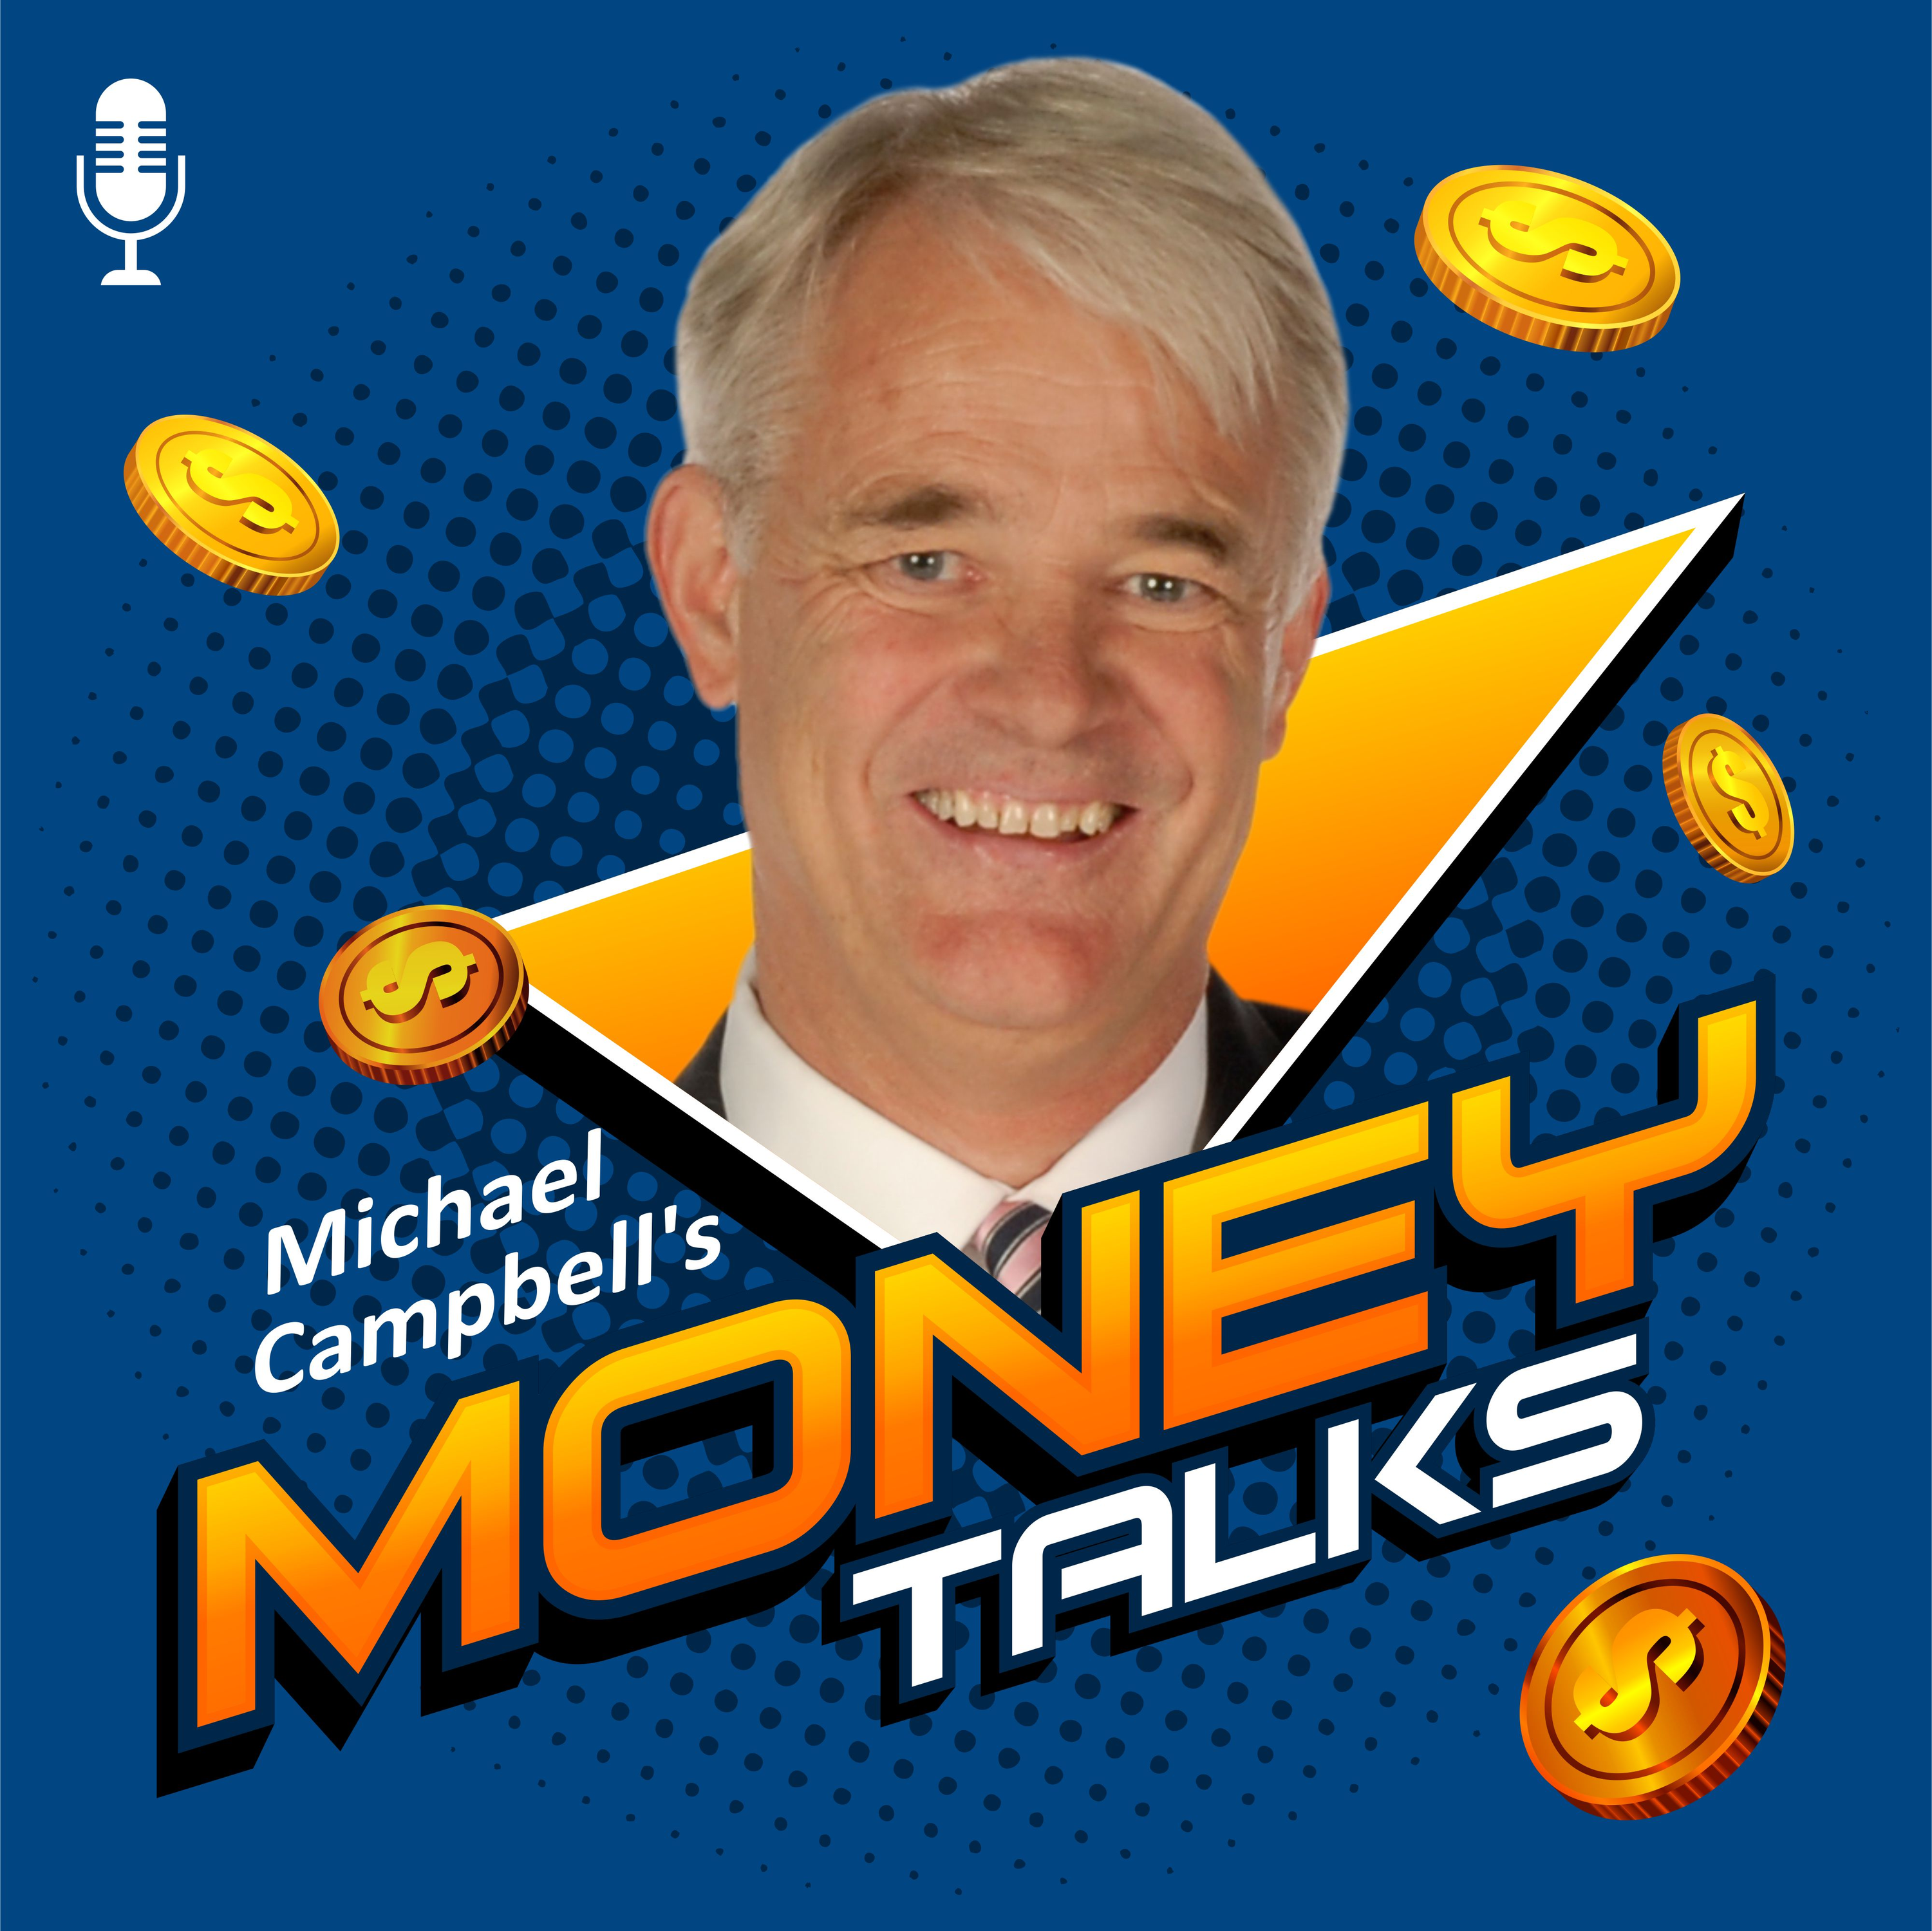 Money Talks - September 9 - Lead